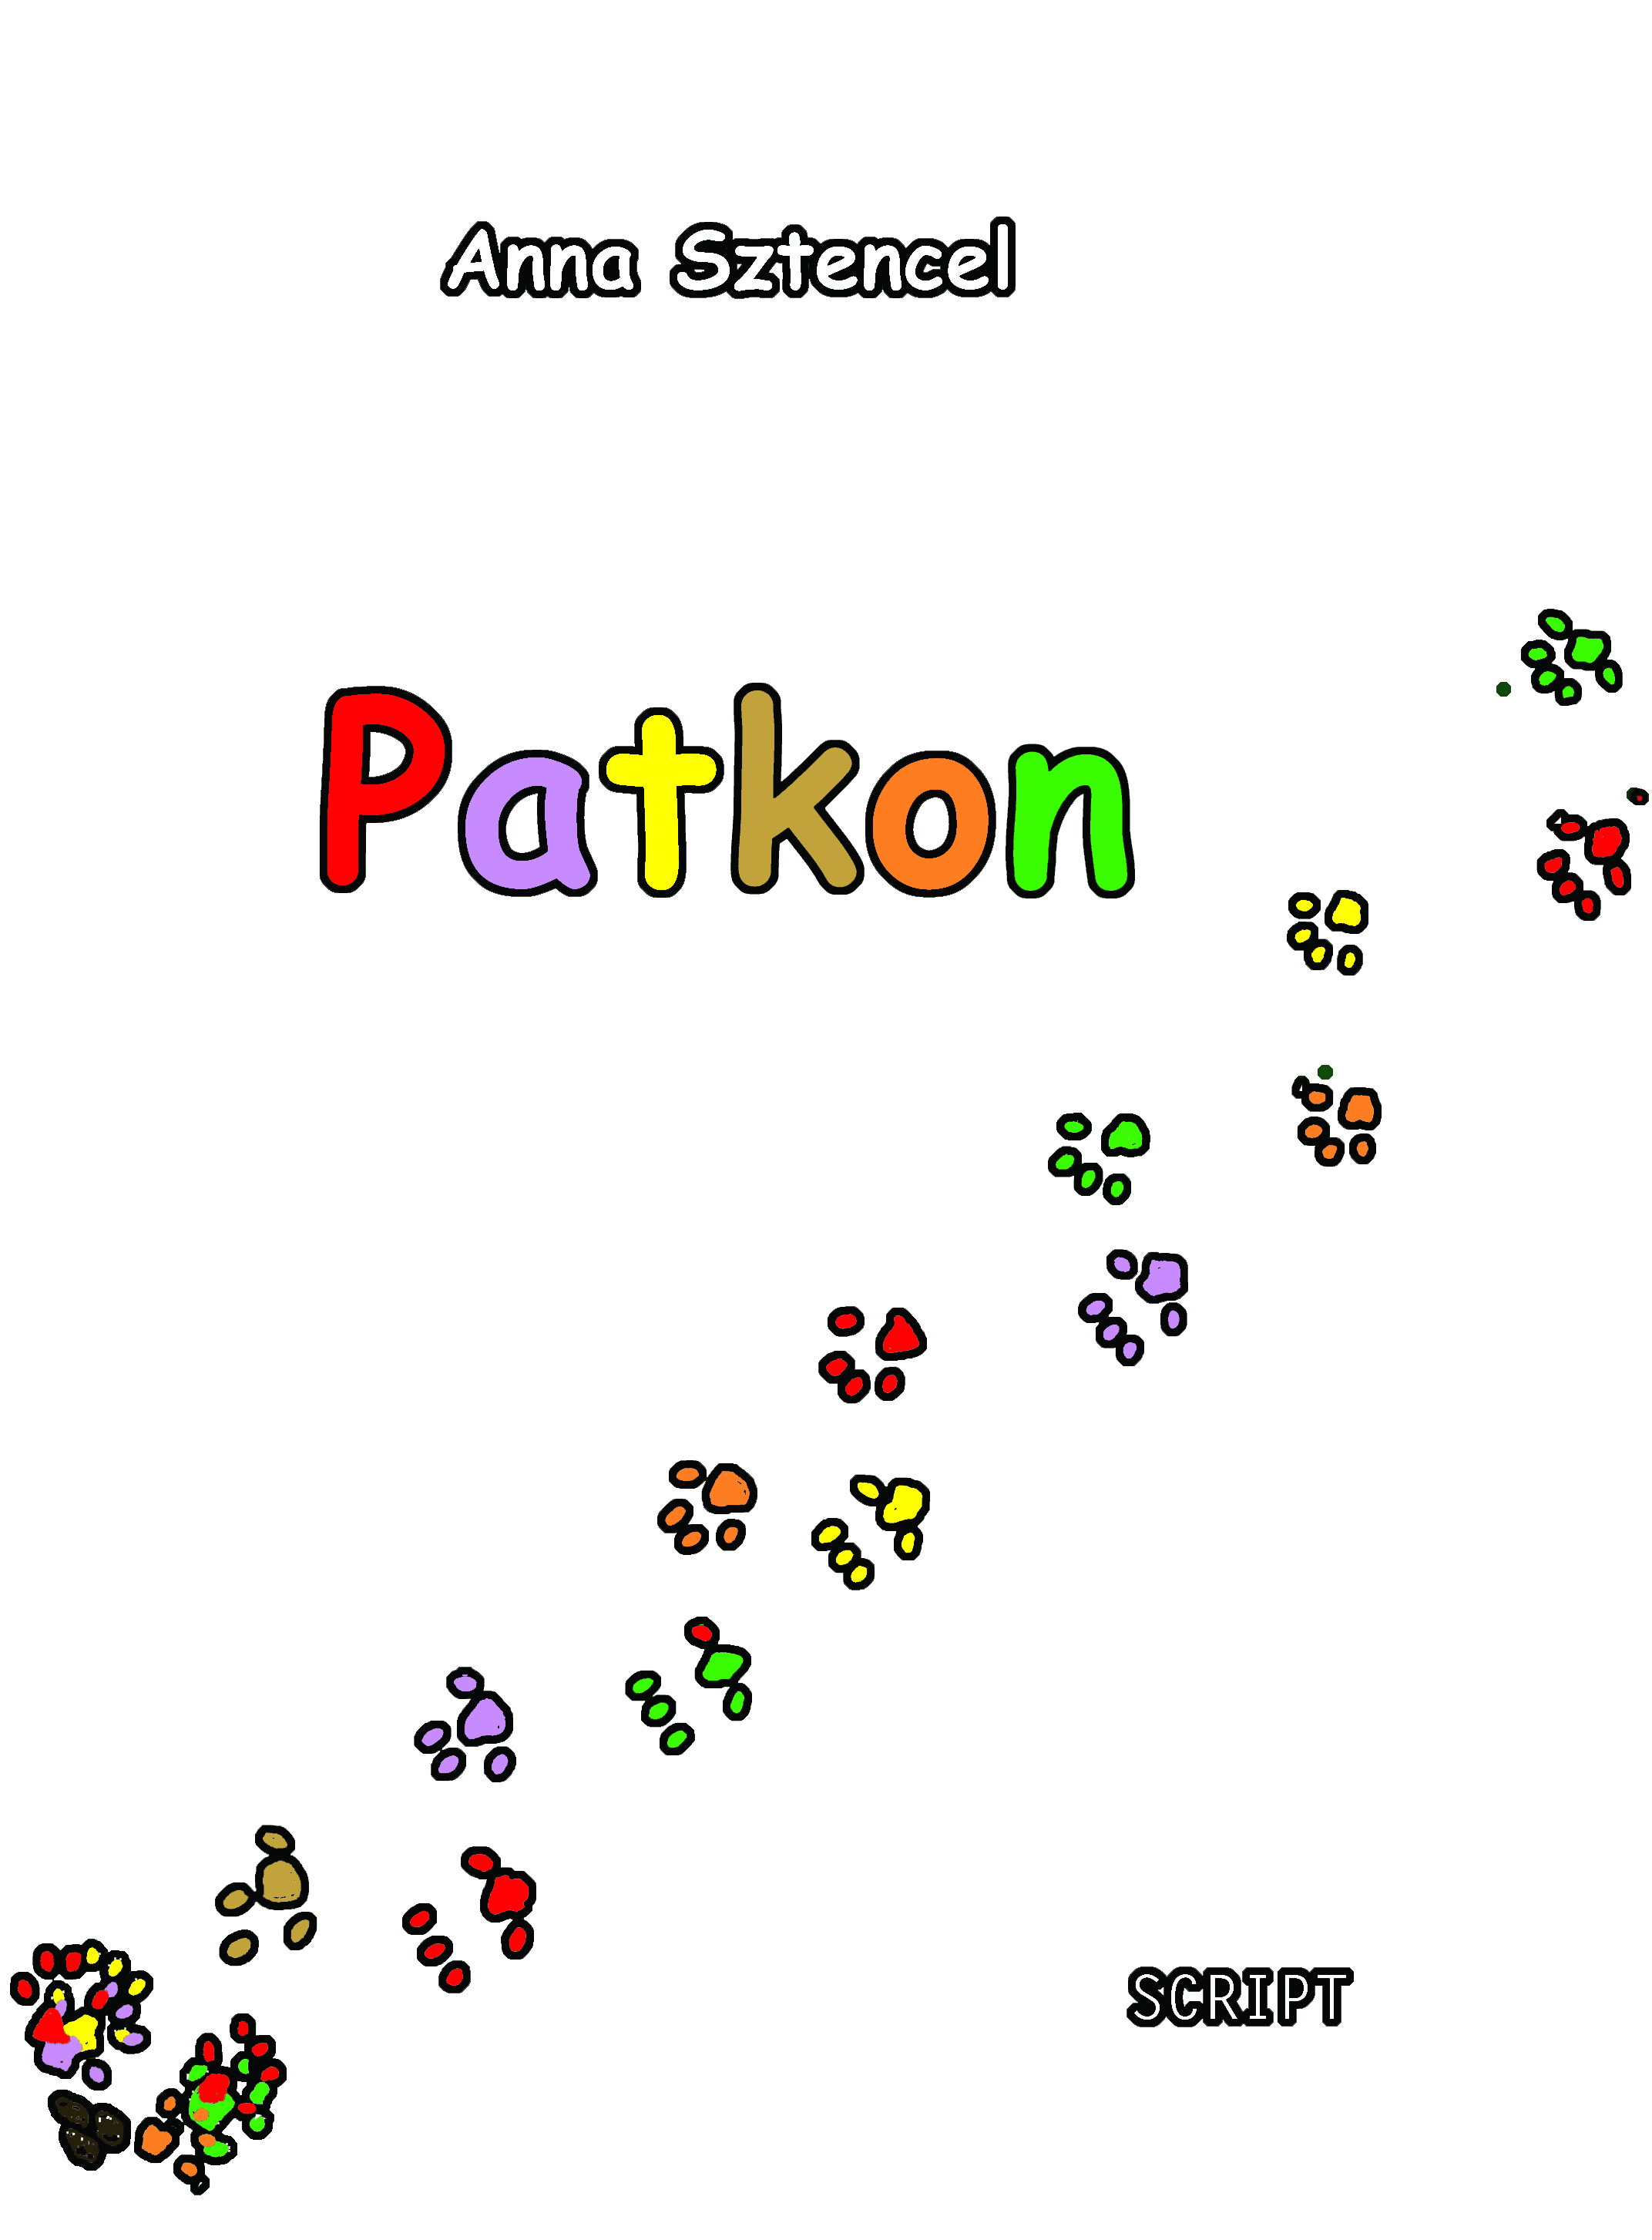 Patkon II